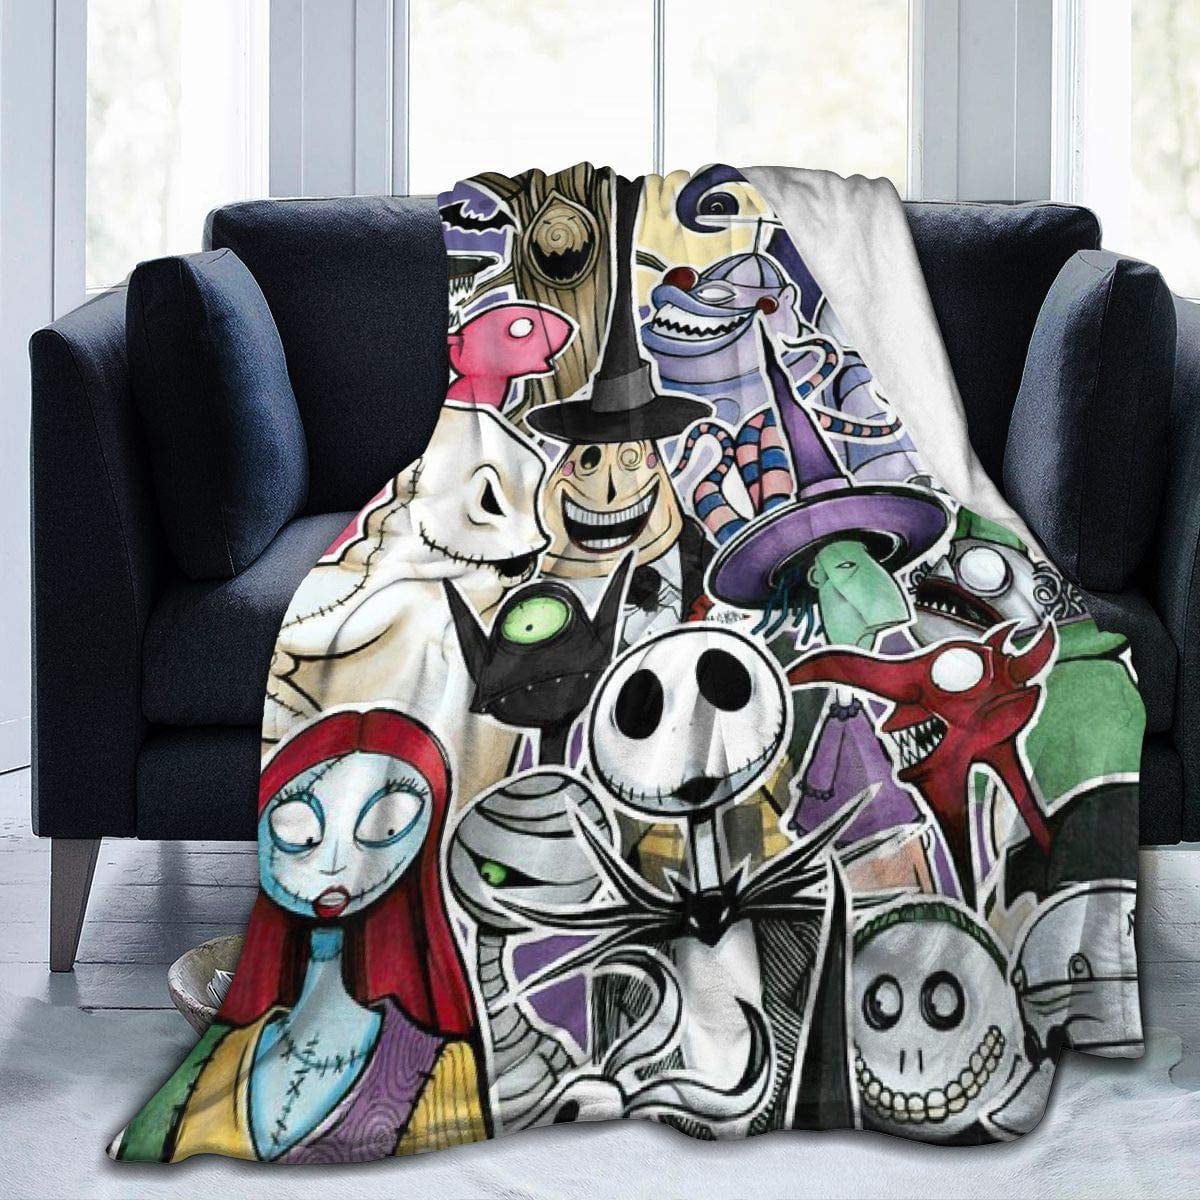 Skull Skeleton Bone Super Soft Micro Fleece Blanket Home Decor Warm Anti-Pilling Flannel Throw Blanket for Couch Bed Sofa 60x50 